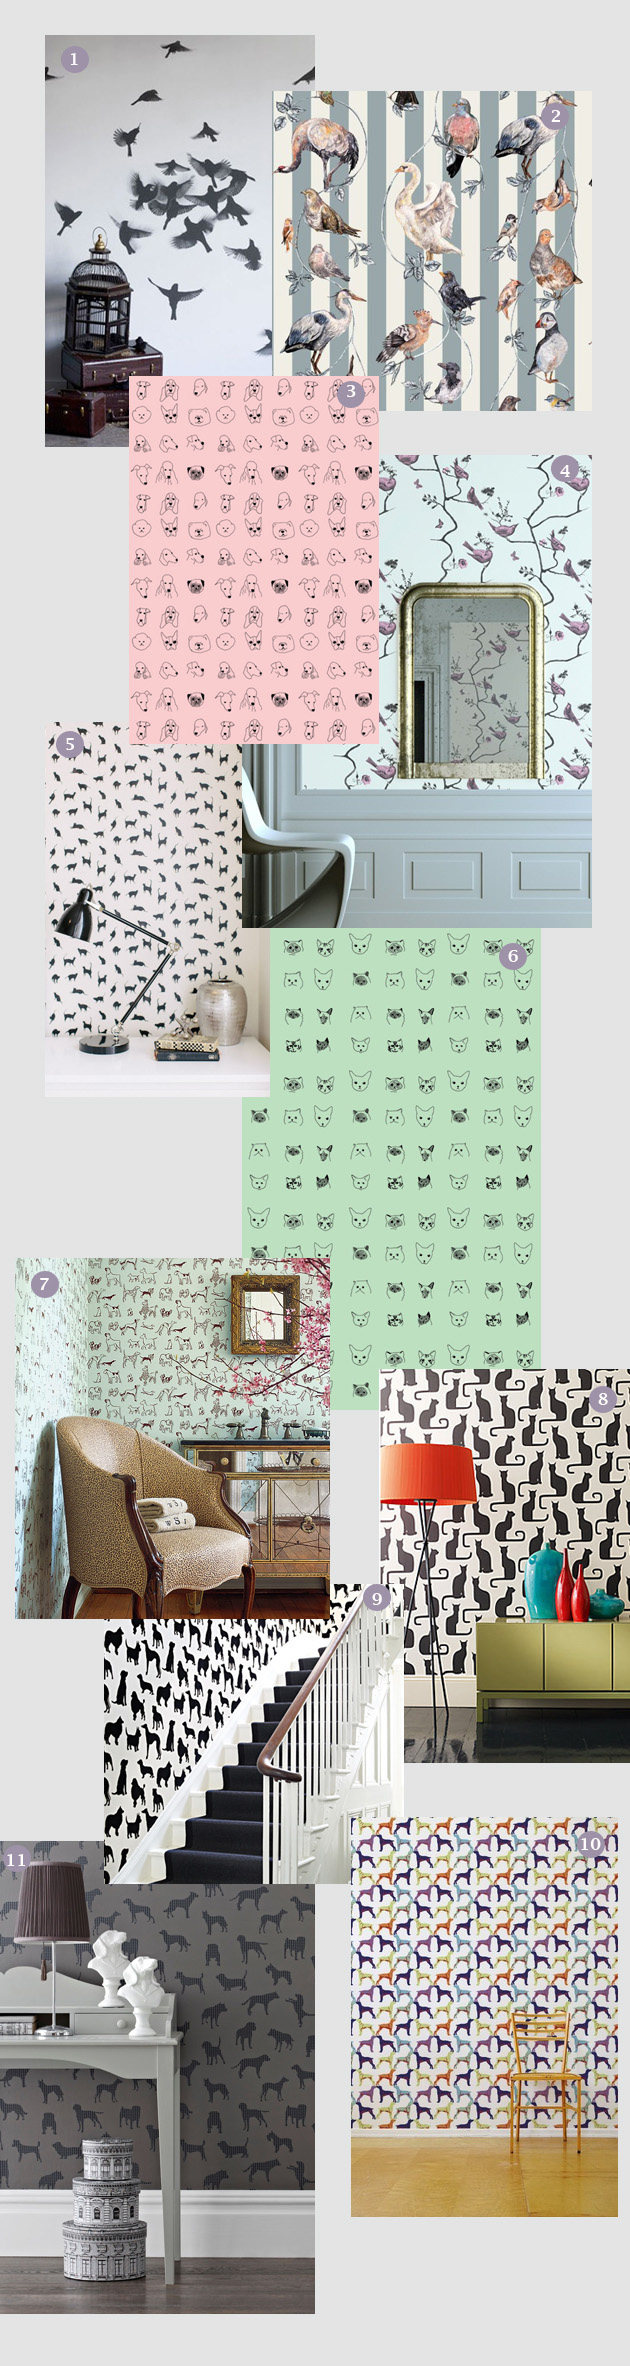 Interiors Inspiration Animal Wallpaper Prints Styletails